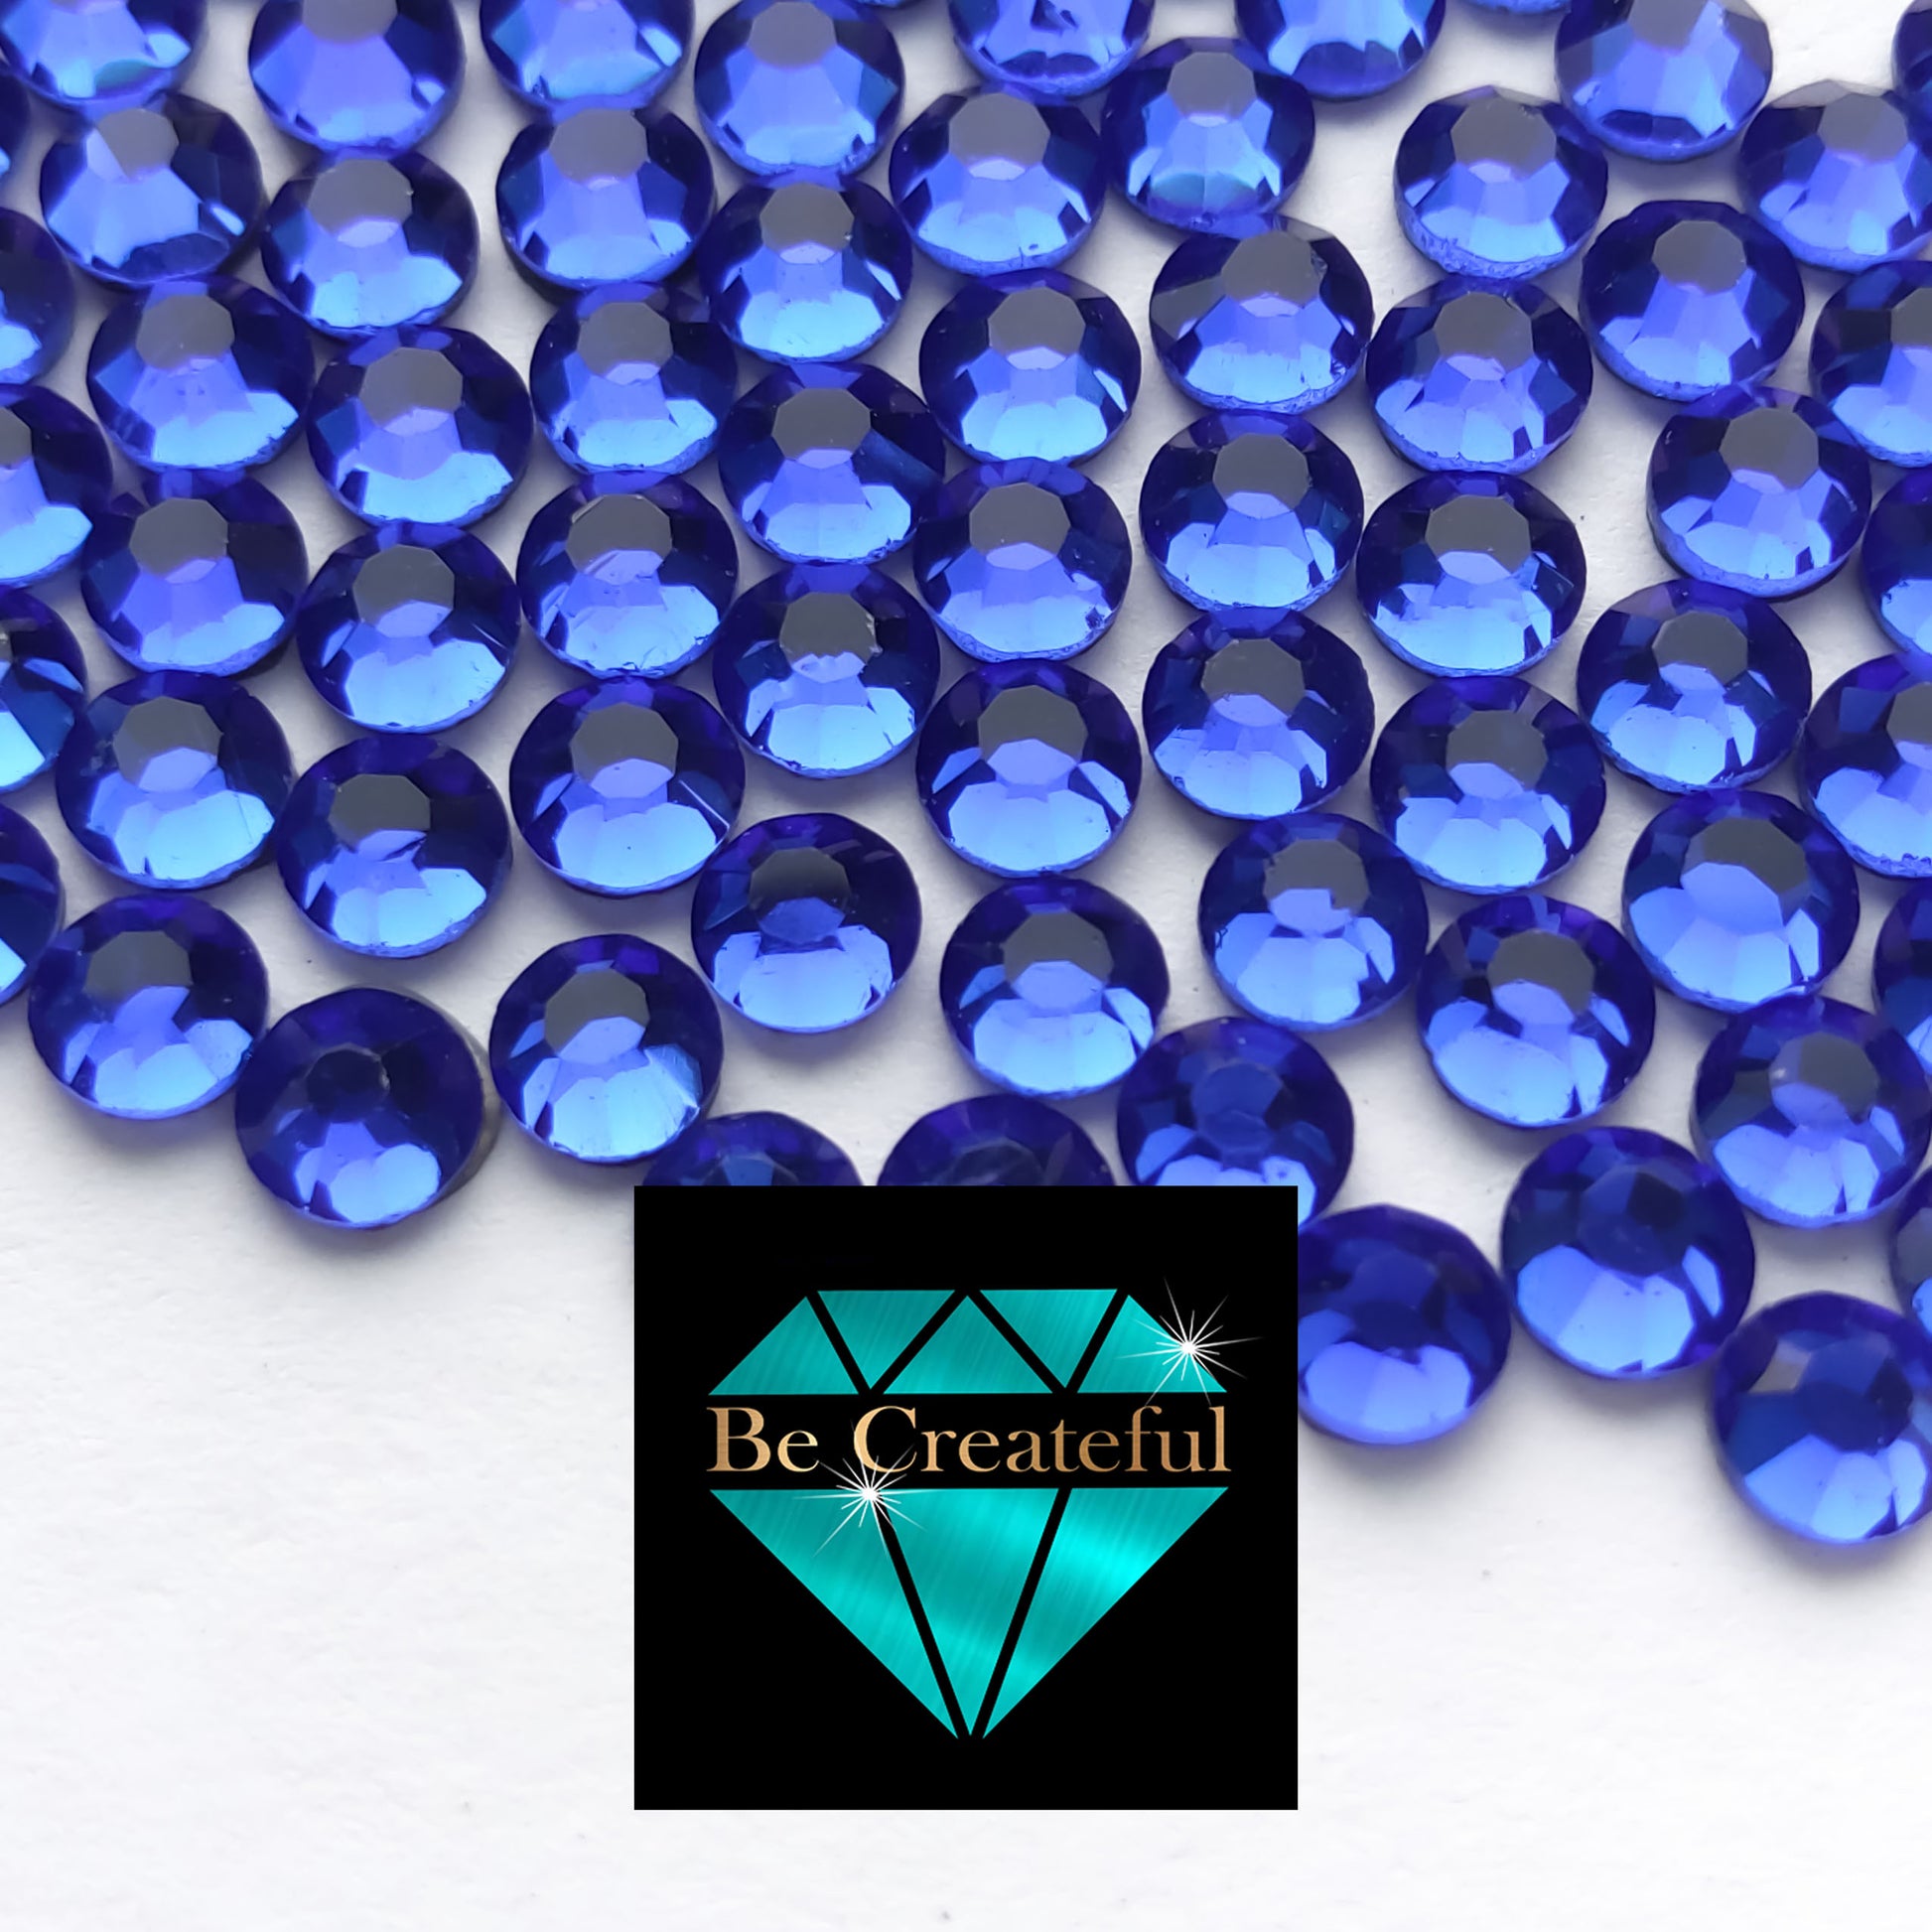 DMC Cobalt Blue Glass Hotfixs Rhinestones - Be Createful, Beautiful Rhinestones at wholesale prices.